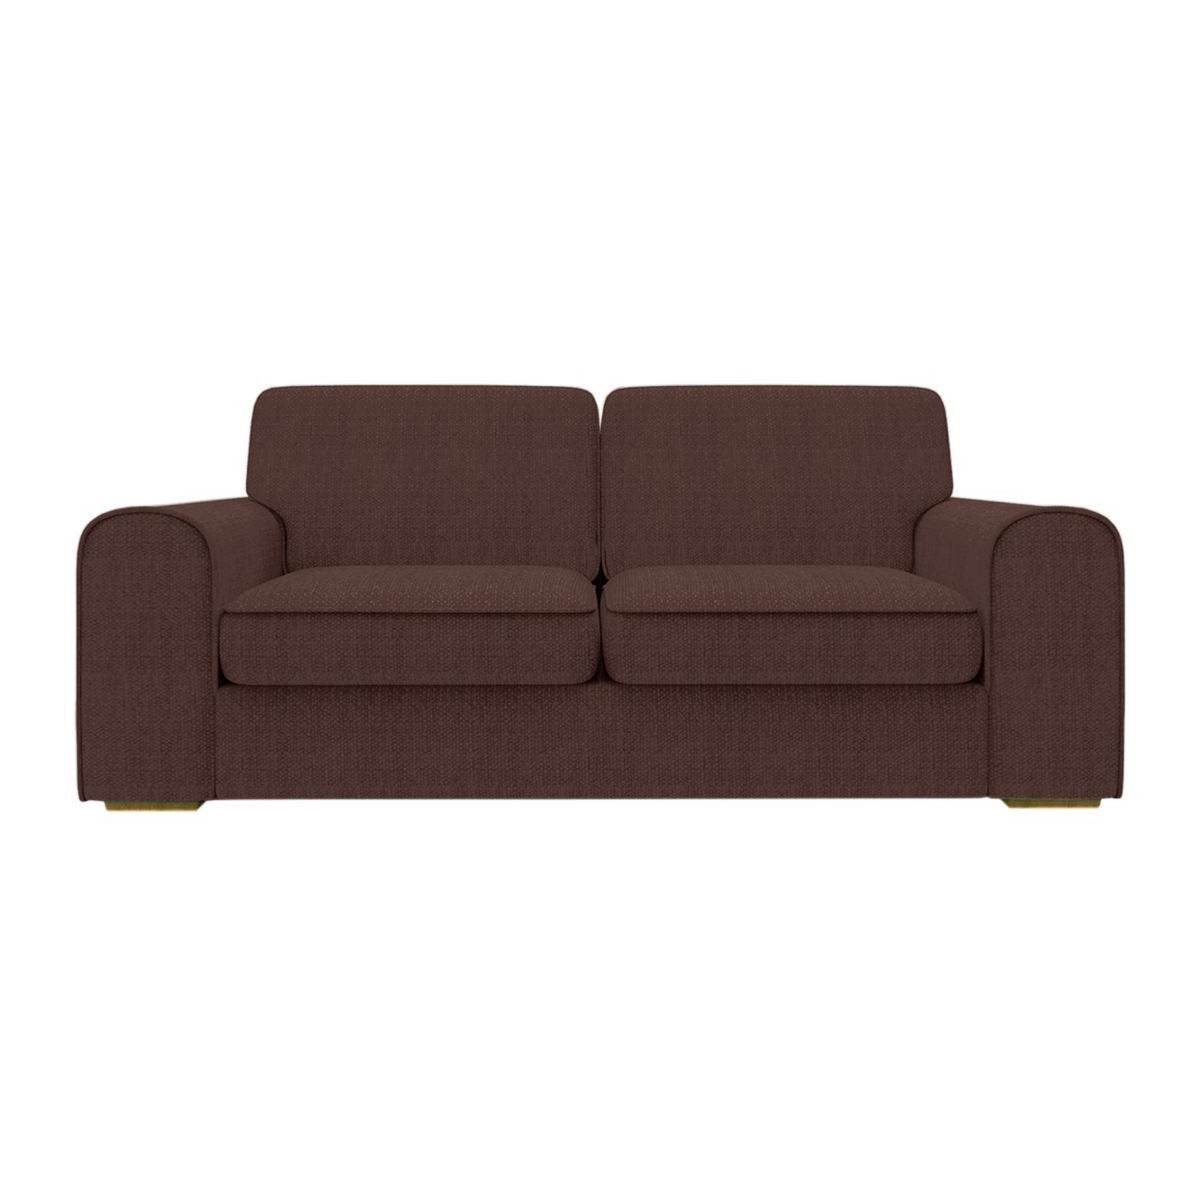 Colista 3 Seater Sofa, burgundy - image 1